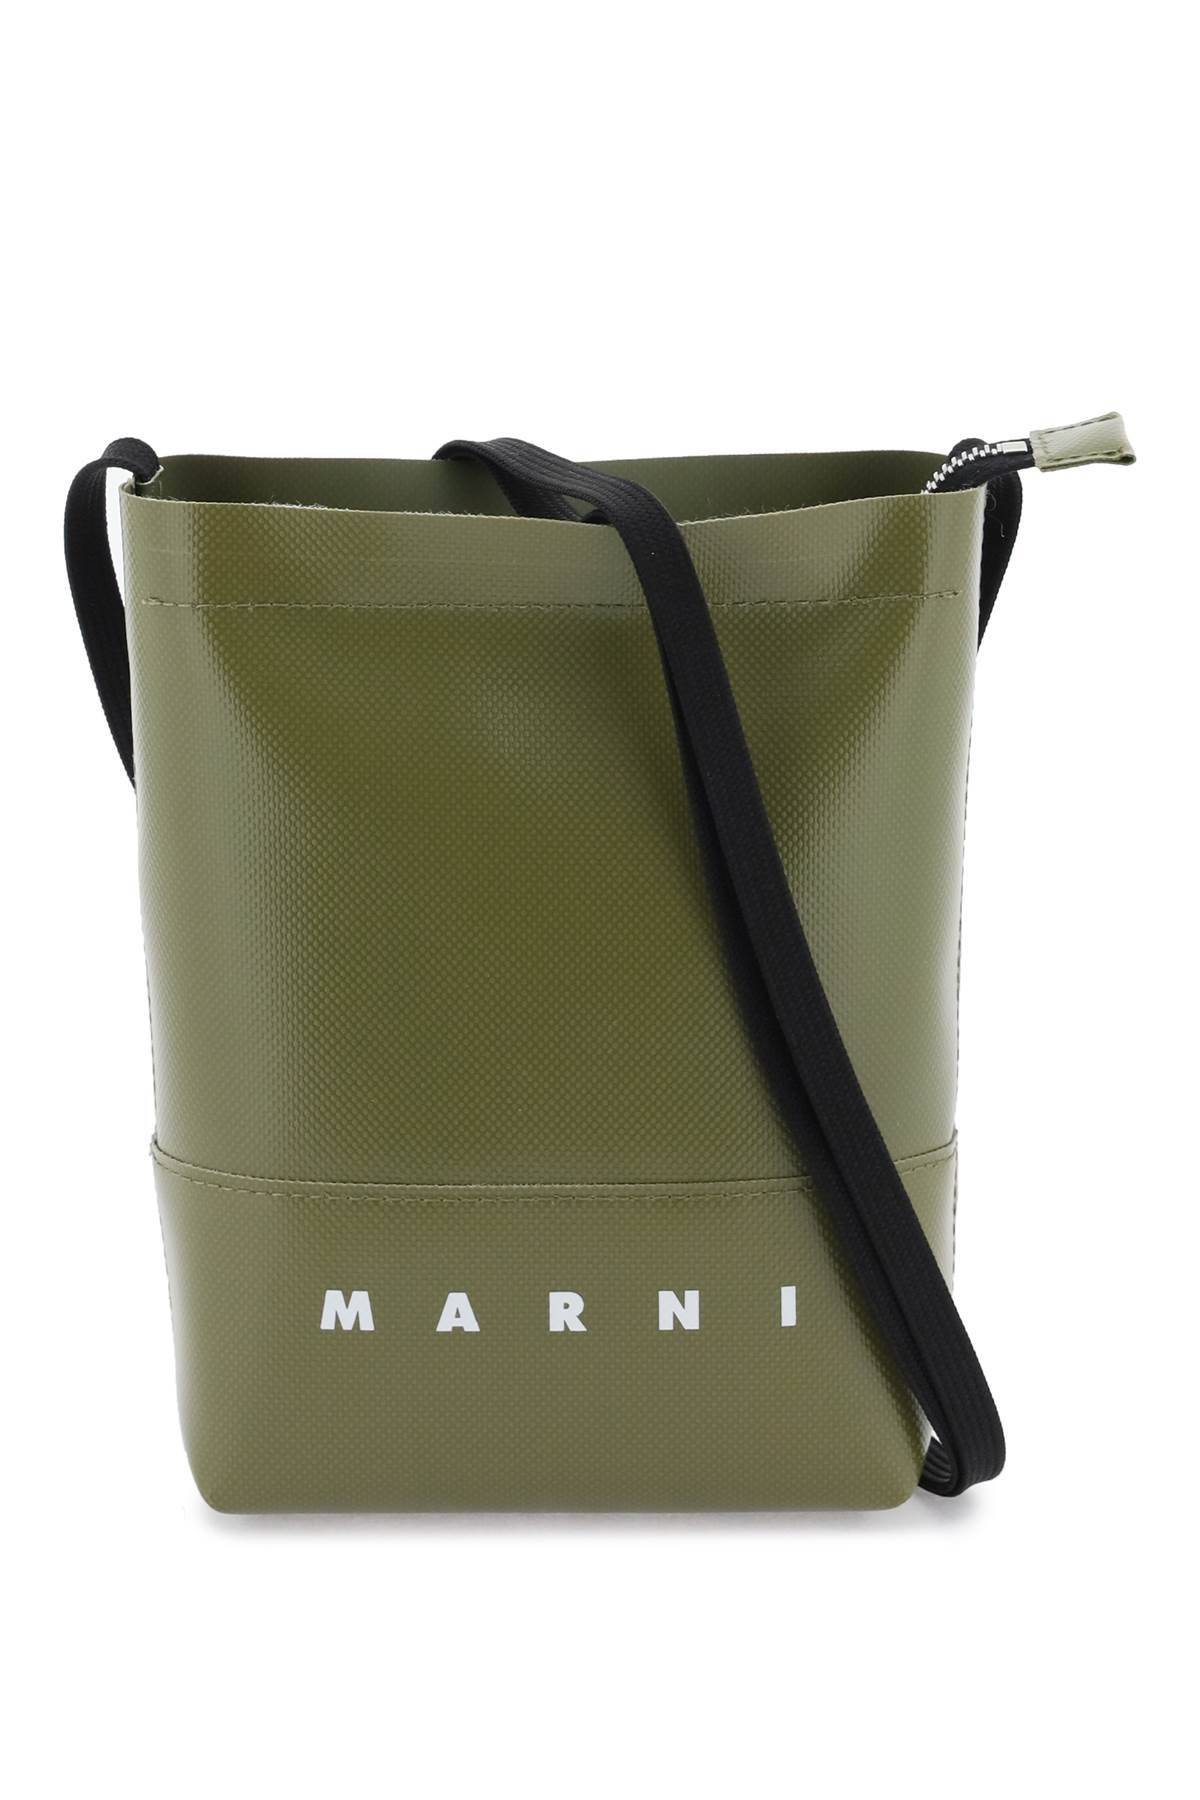 Marni MARNI coated canvas crossbody bag